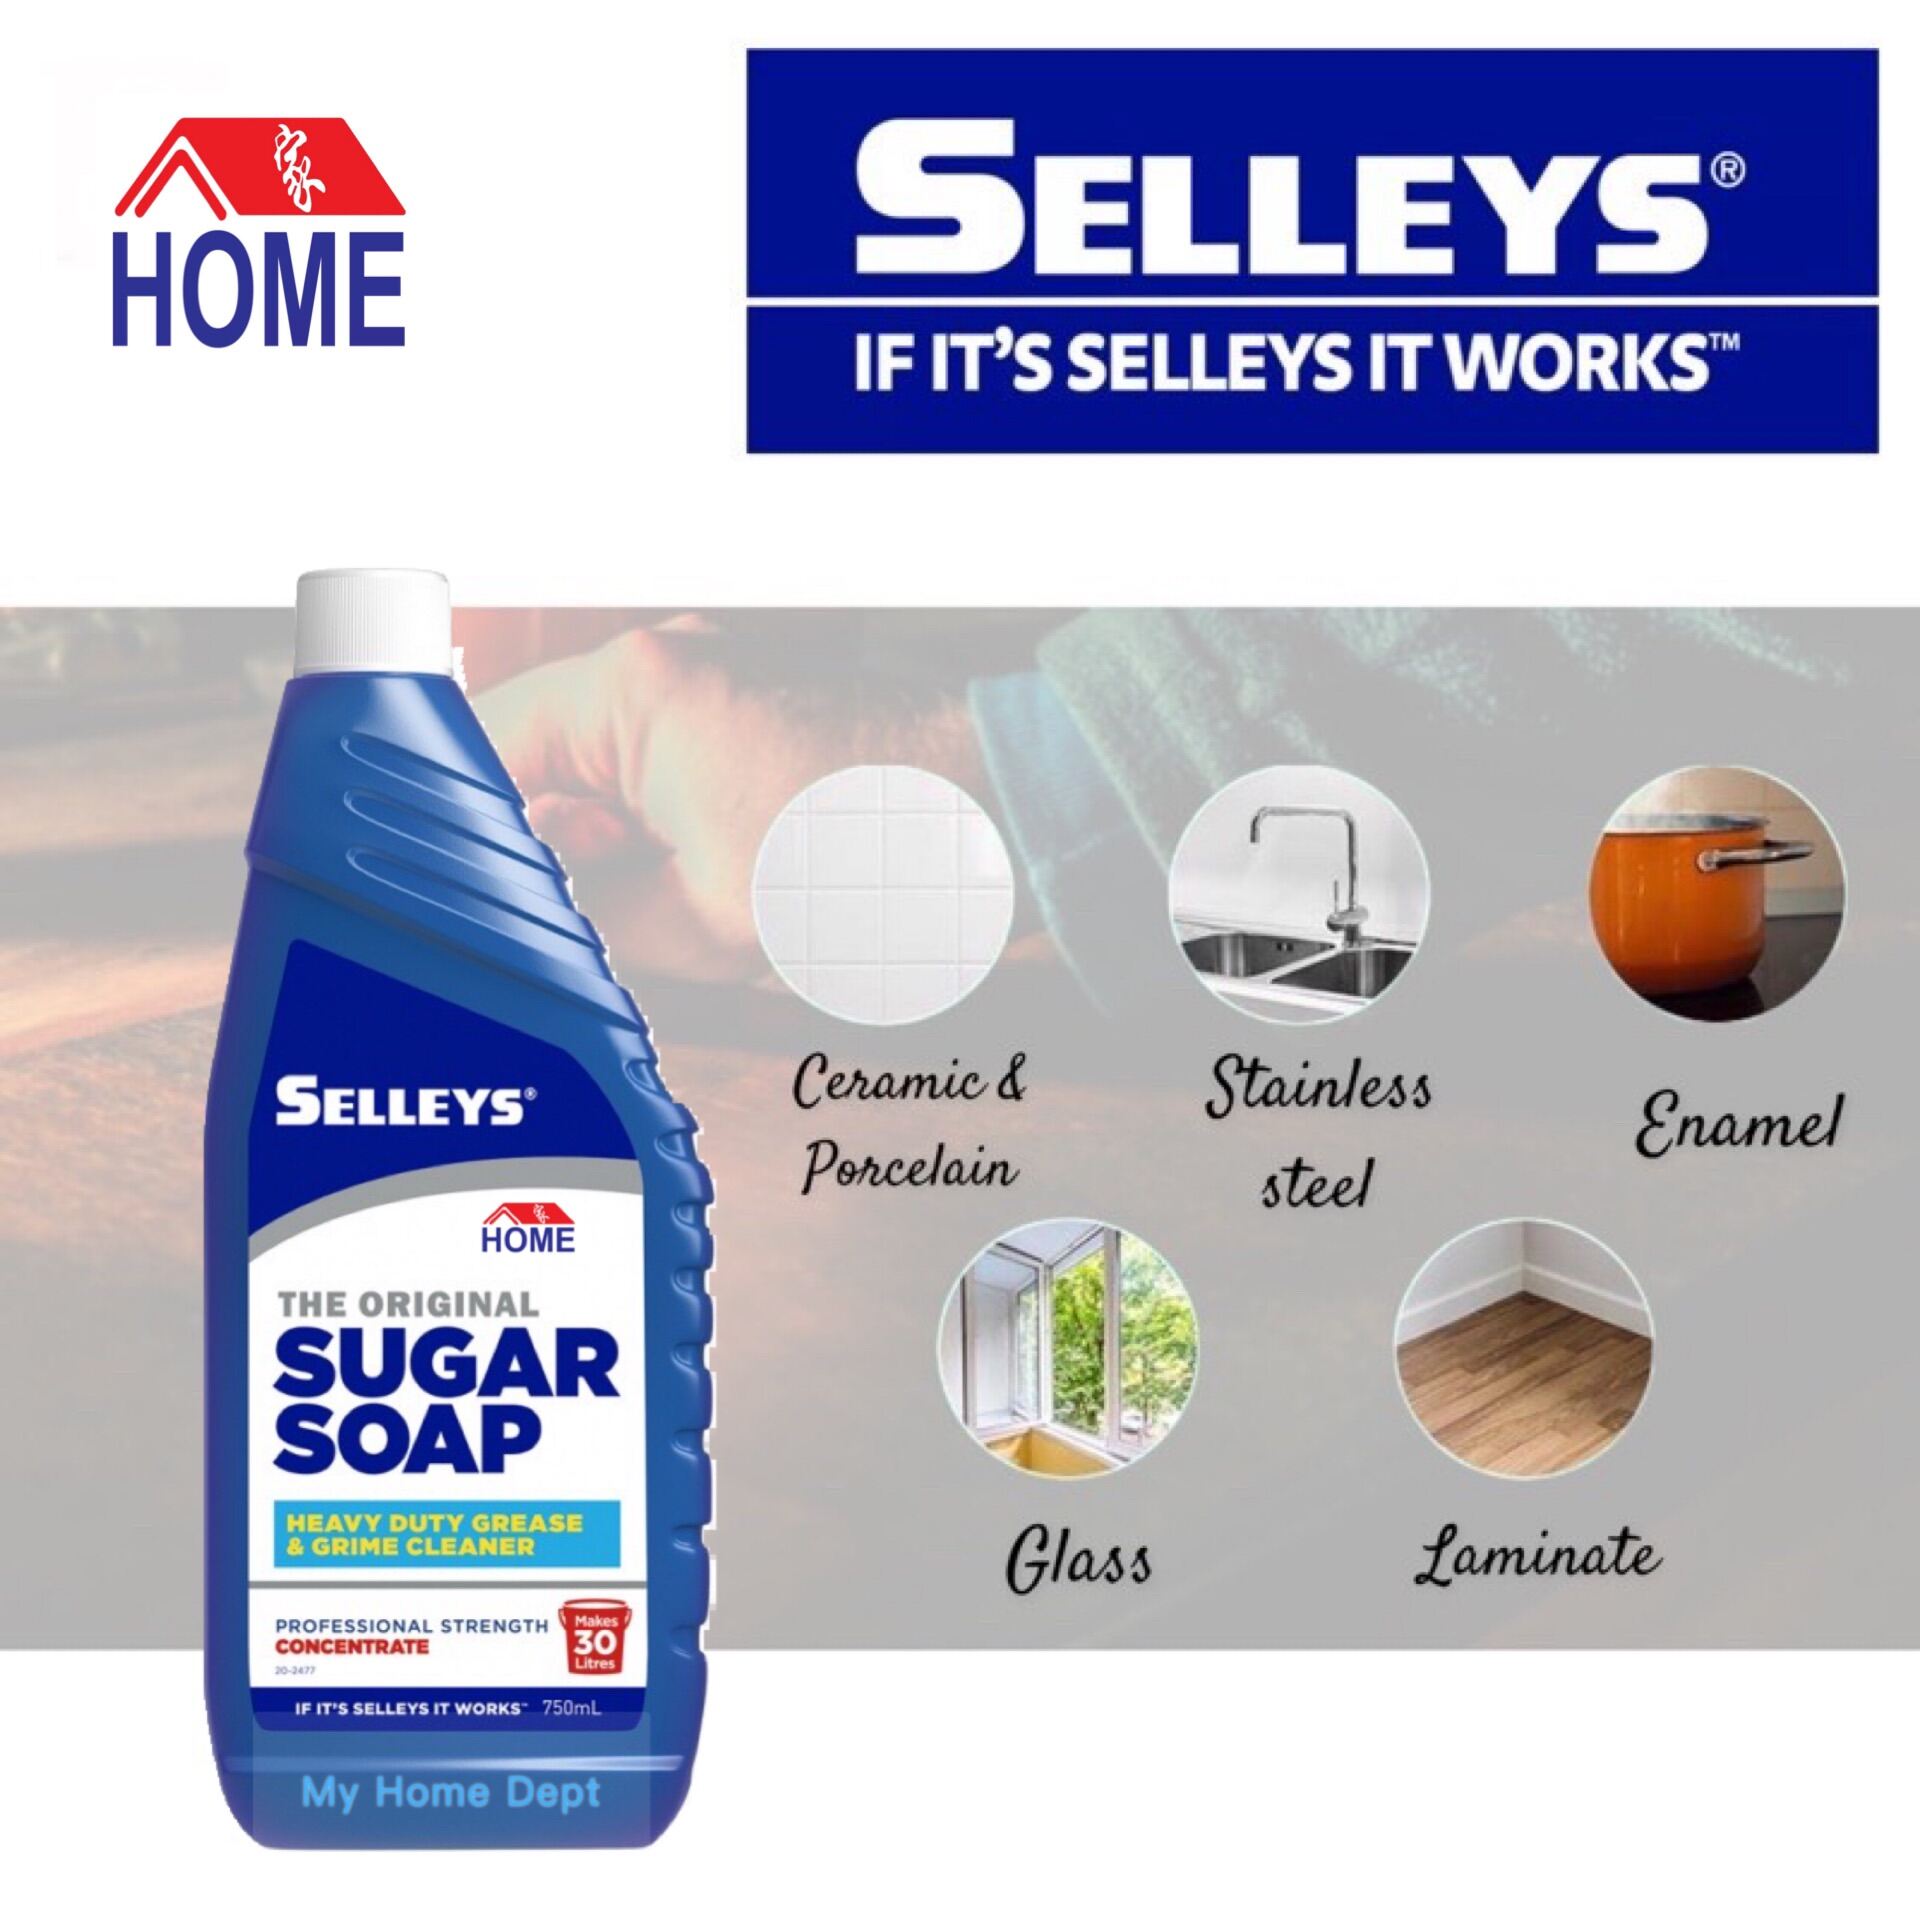 Selleys Liquid Sugar Soap – Nippon Paint Singapore